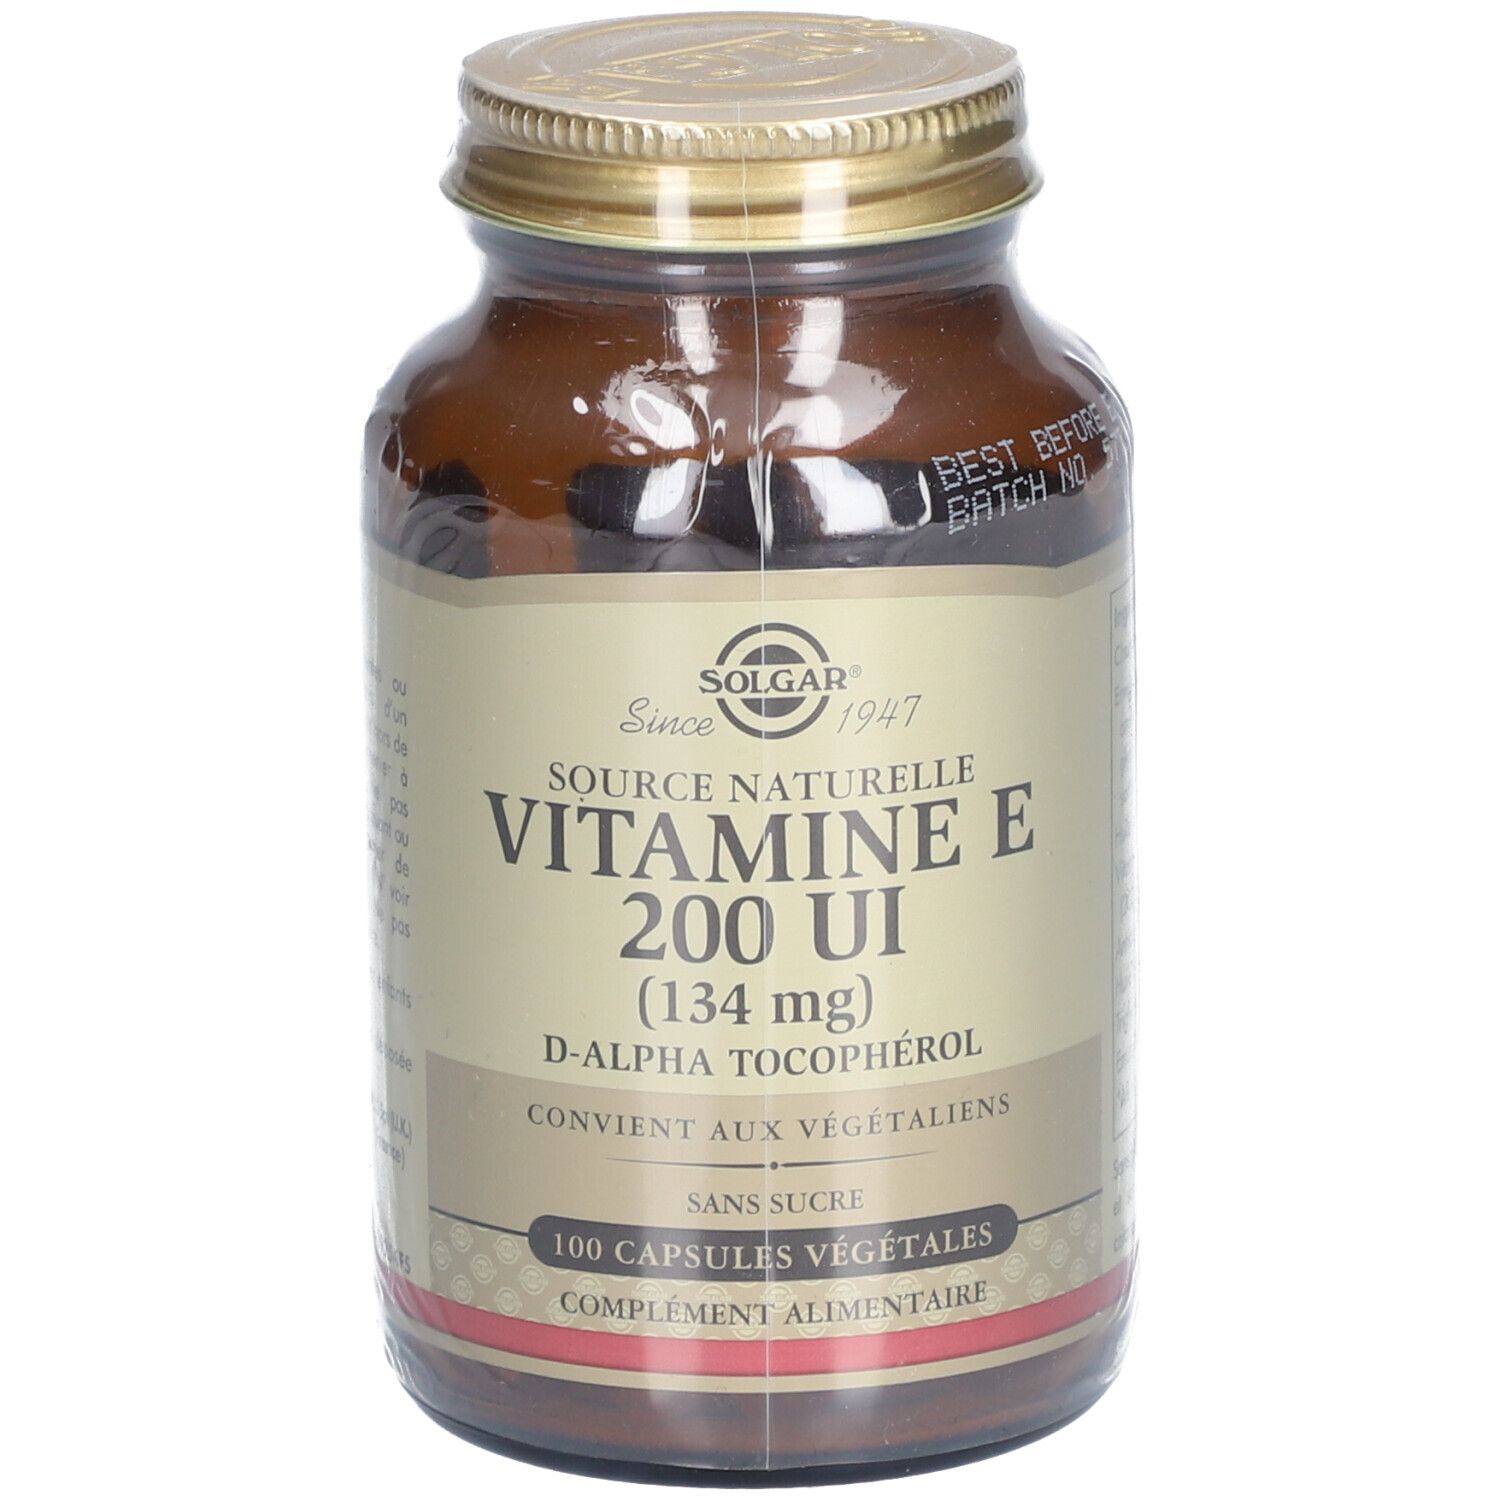 Solgar Vitamine E 200 UI